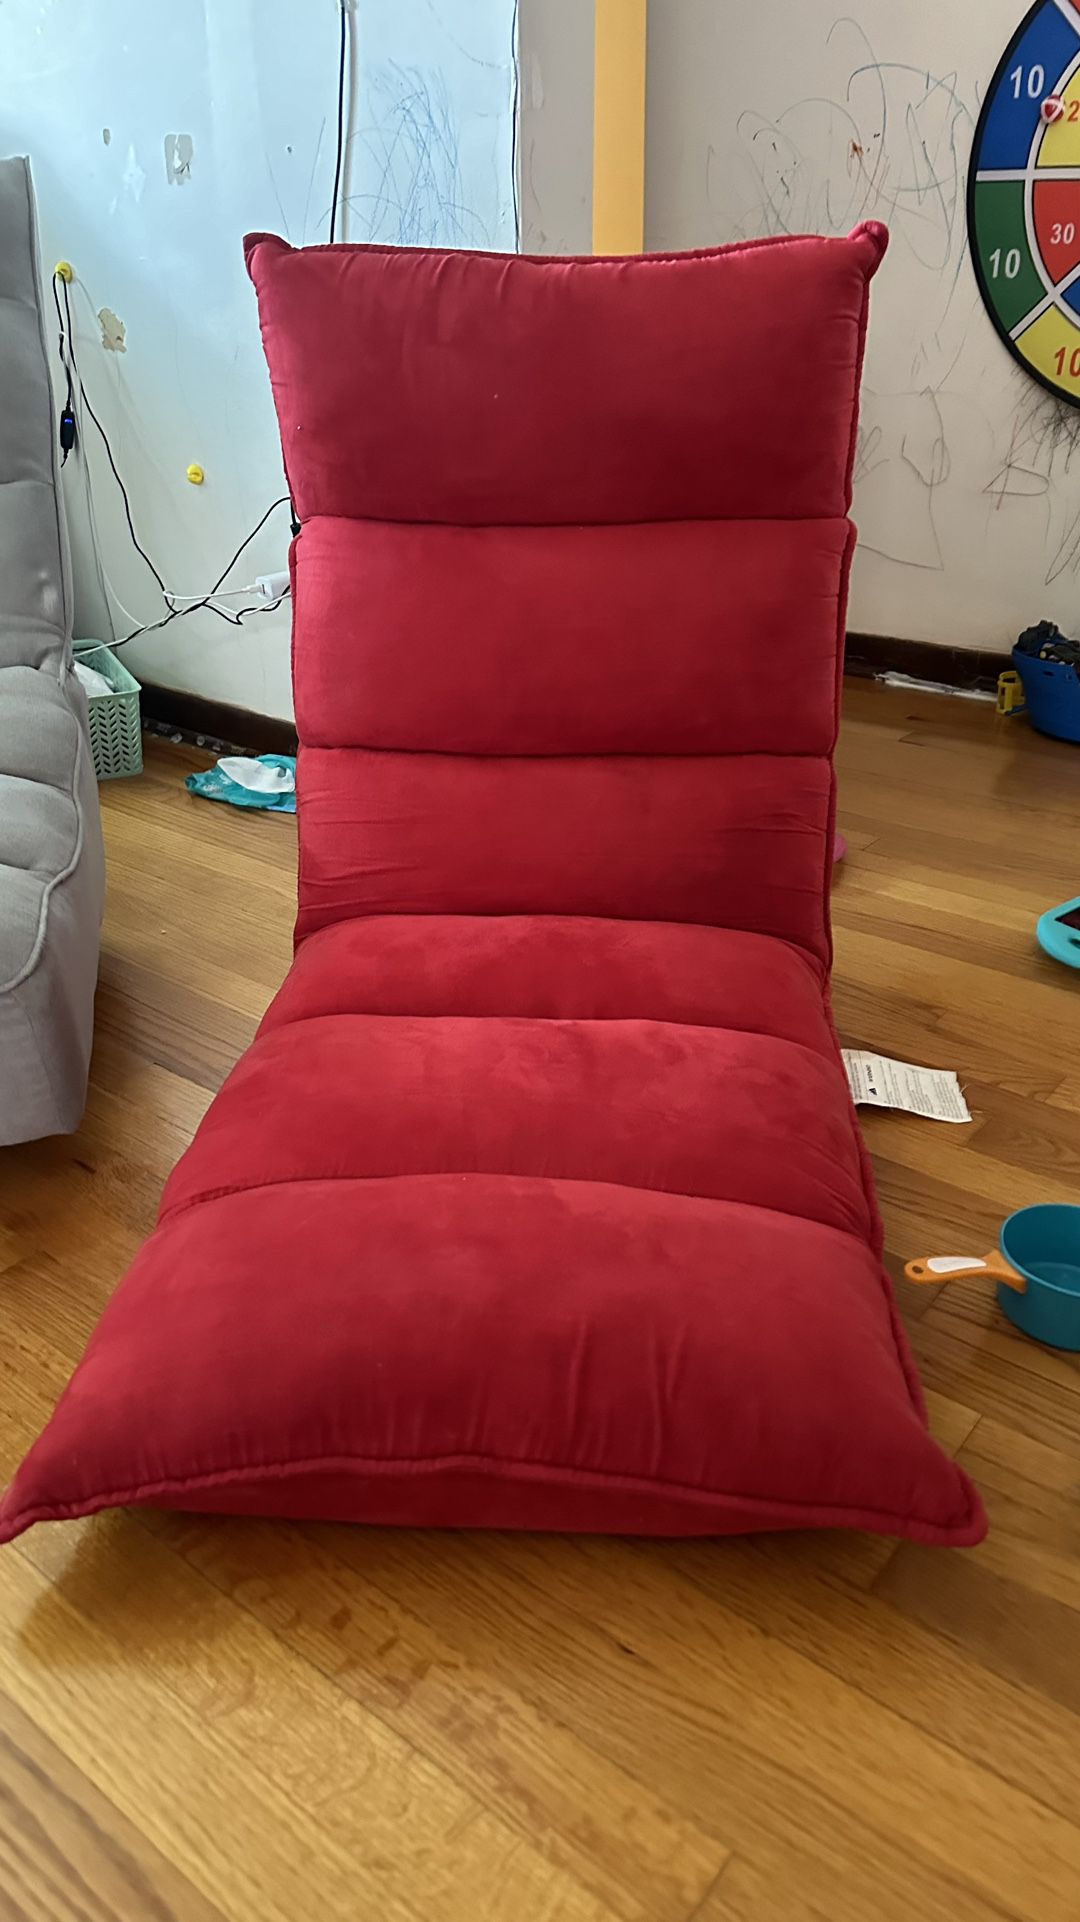 53-inch Memory Foam Floor Chair